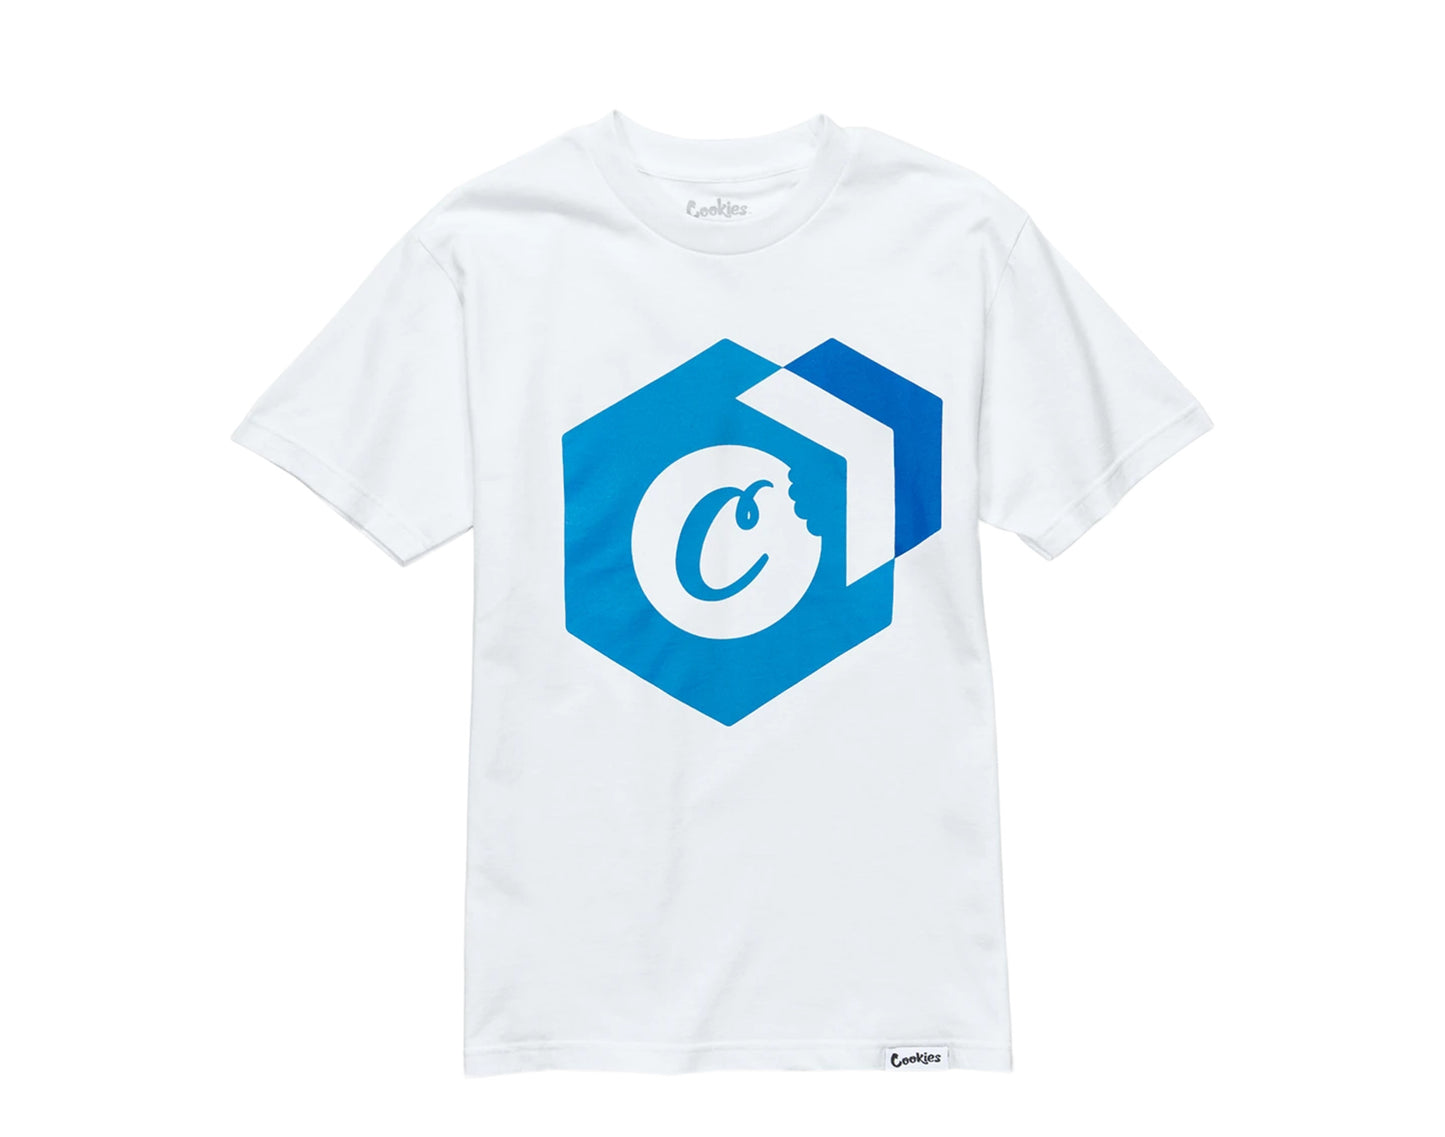 Cookies Bright Future Hexagon Logo White/Blue Men's Tee Shirt 1545T4135-WBL